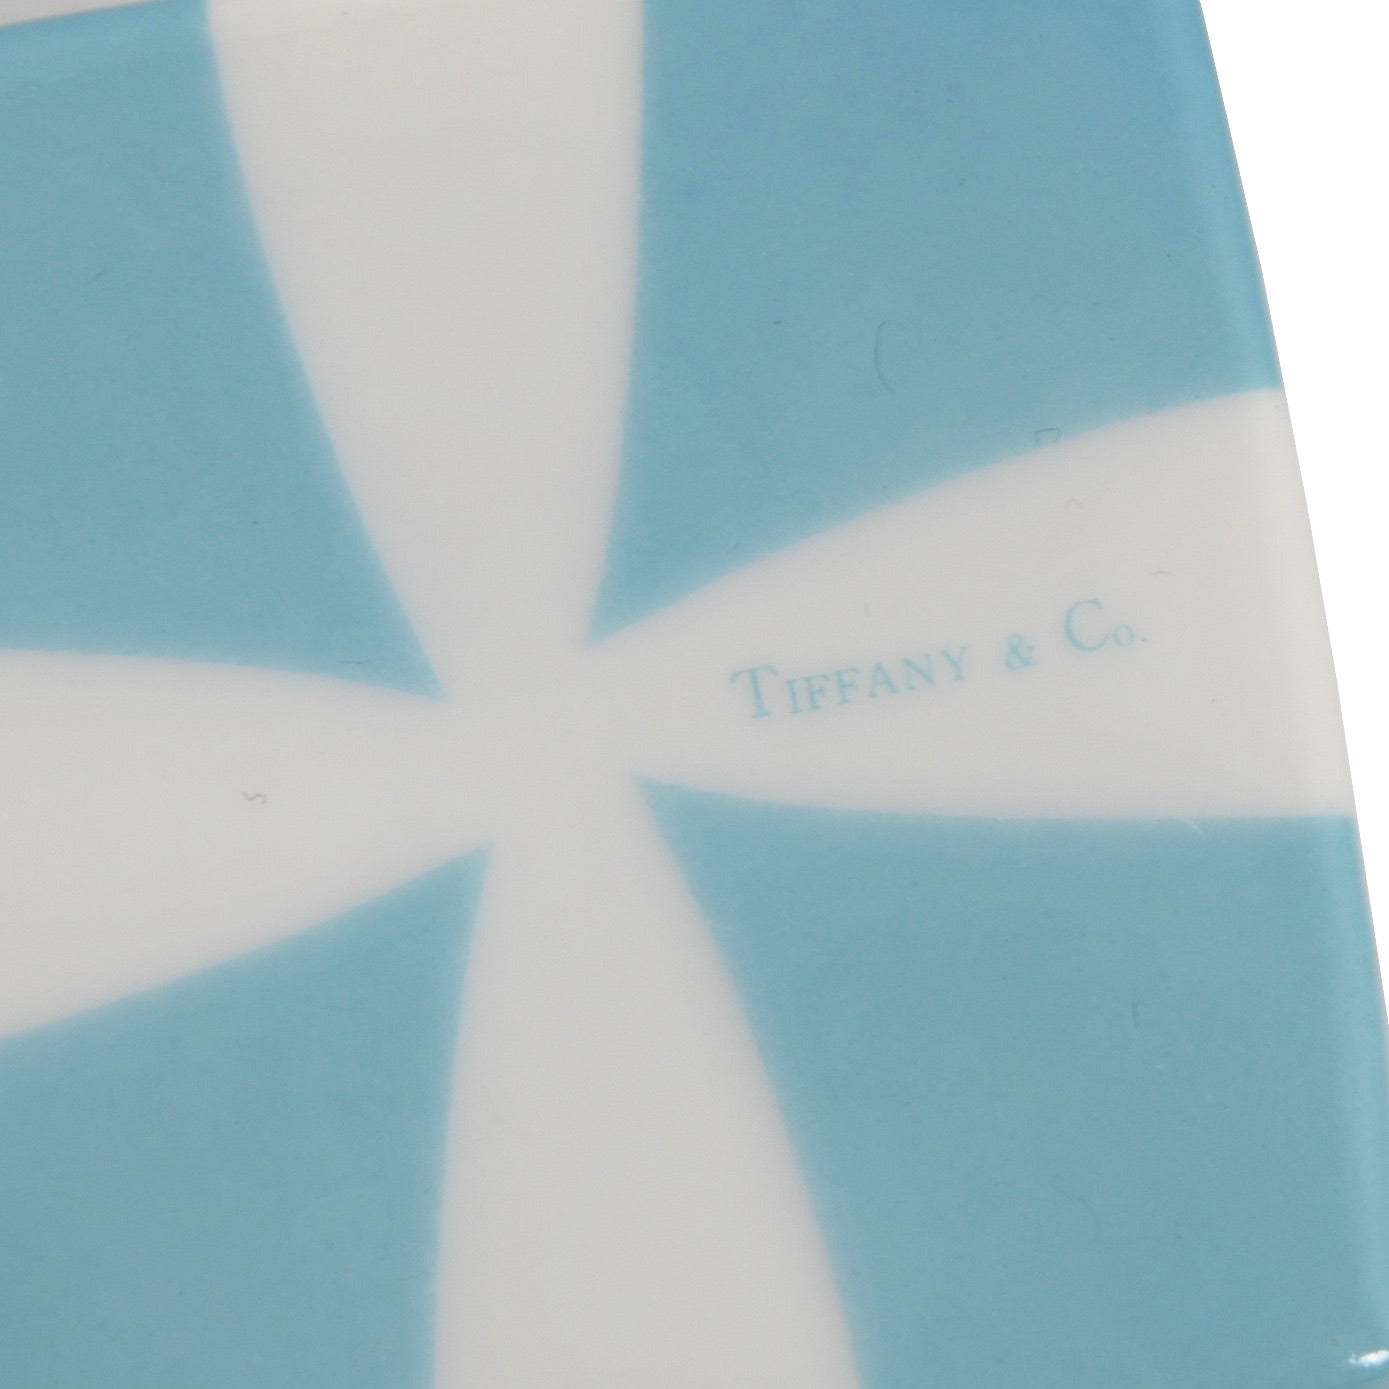 Tiffany & Co. Porcelain Gift Box - 6cm